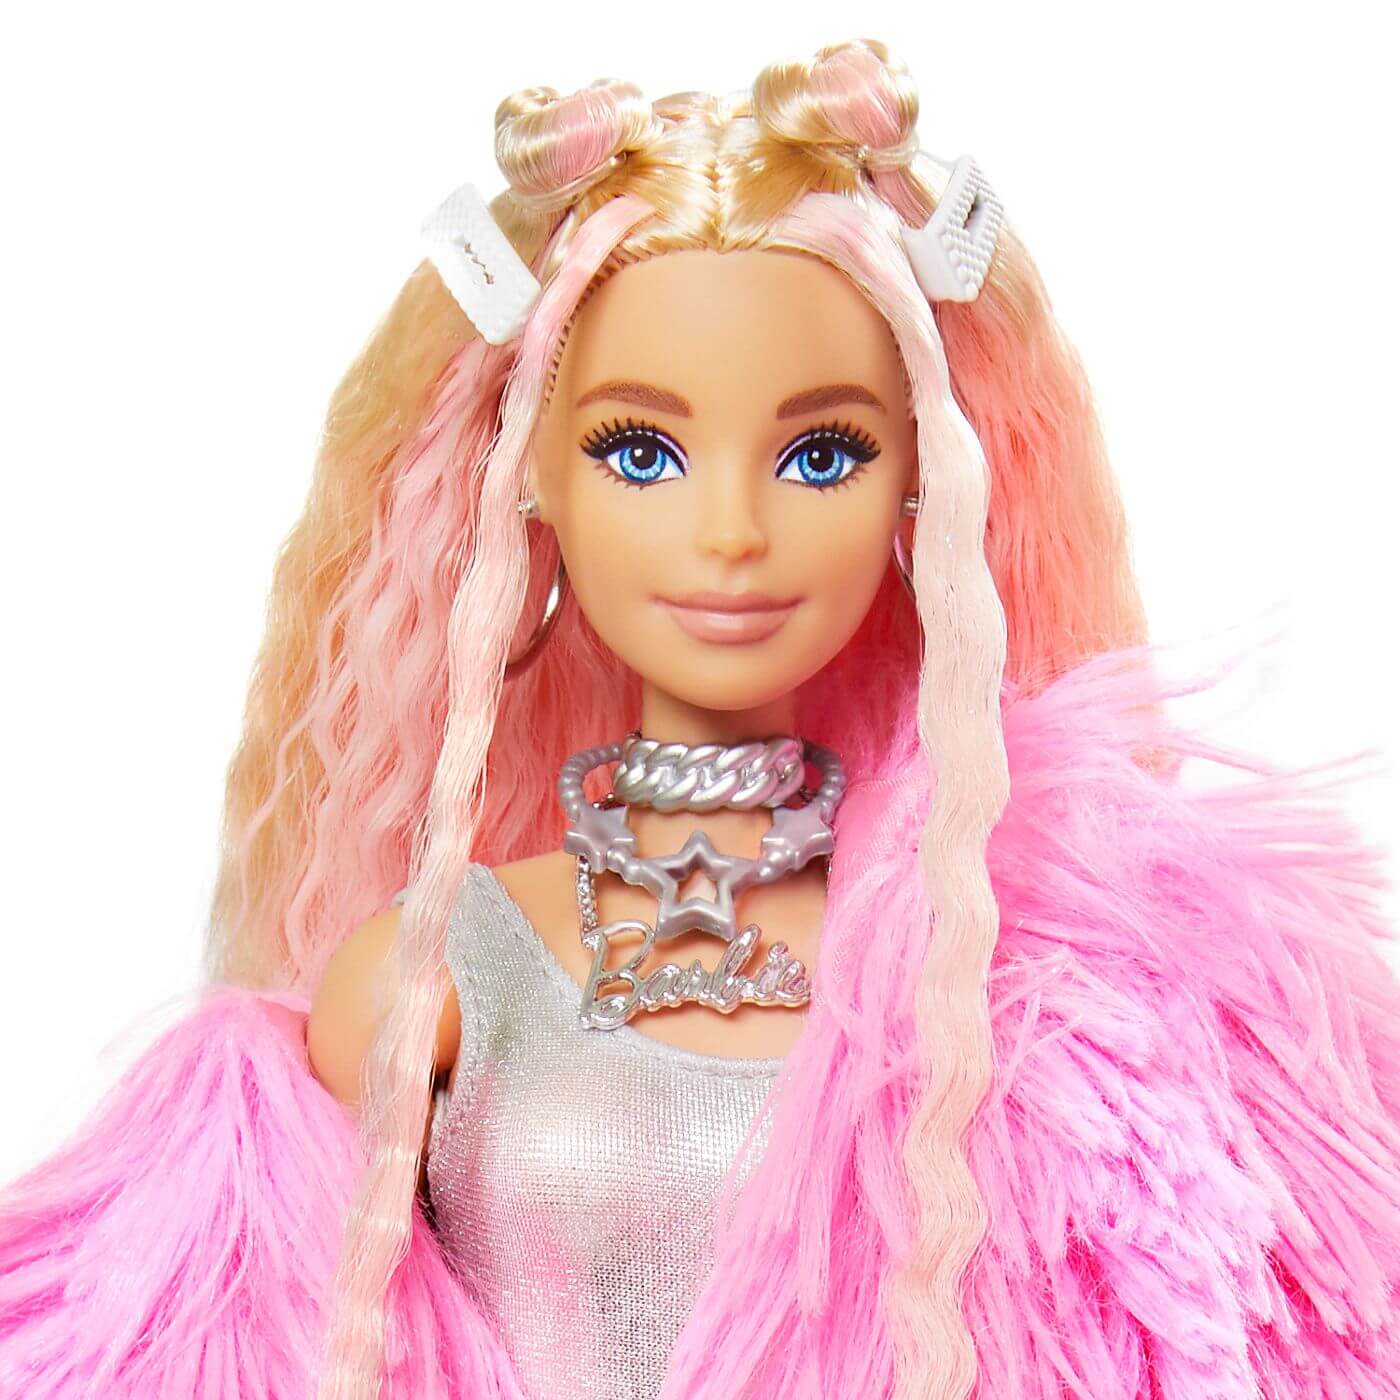 Barbie Extra 3 Abrigo Rosa con Cerdo-Unicornio ( Mattel GRN28 ) imagen c